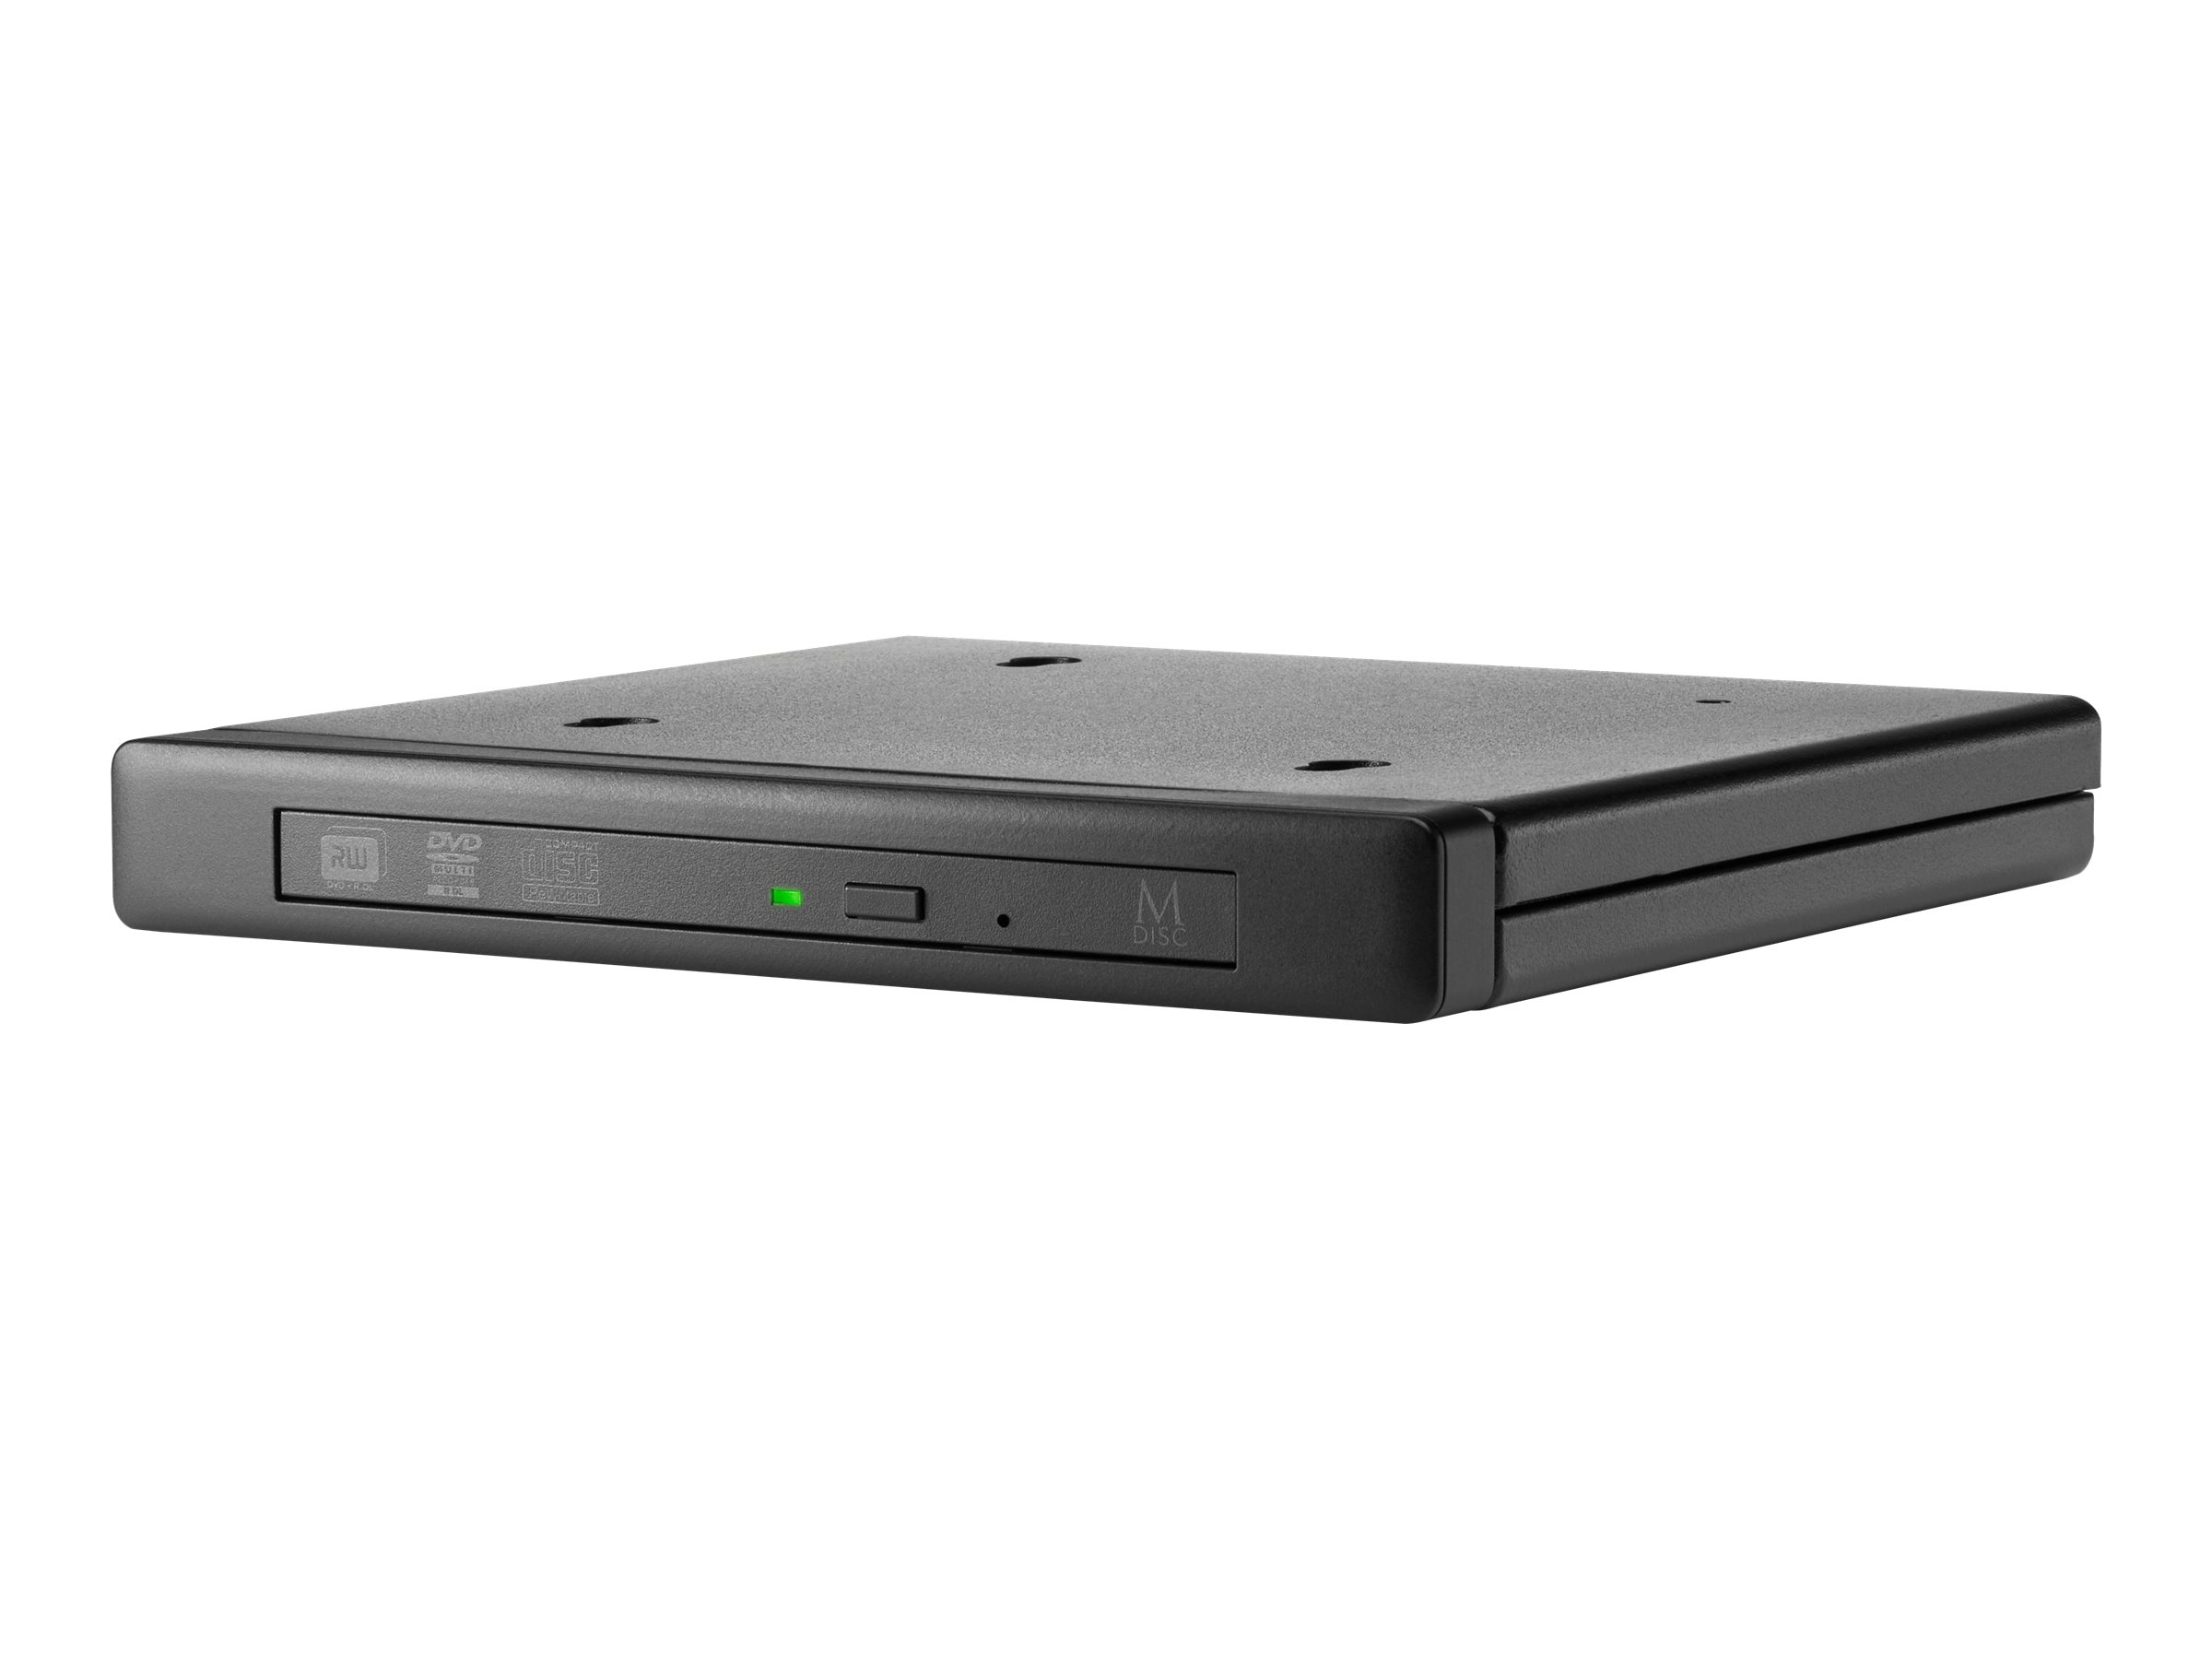 vold Rige sum HP - Disk drive - DVD&#xB1;RW (&#xB1;R DL) / DVD-RAM | www.shi.com